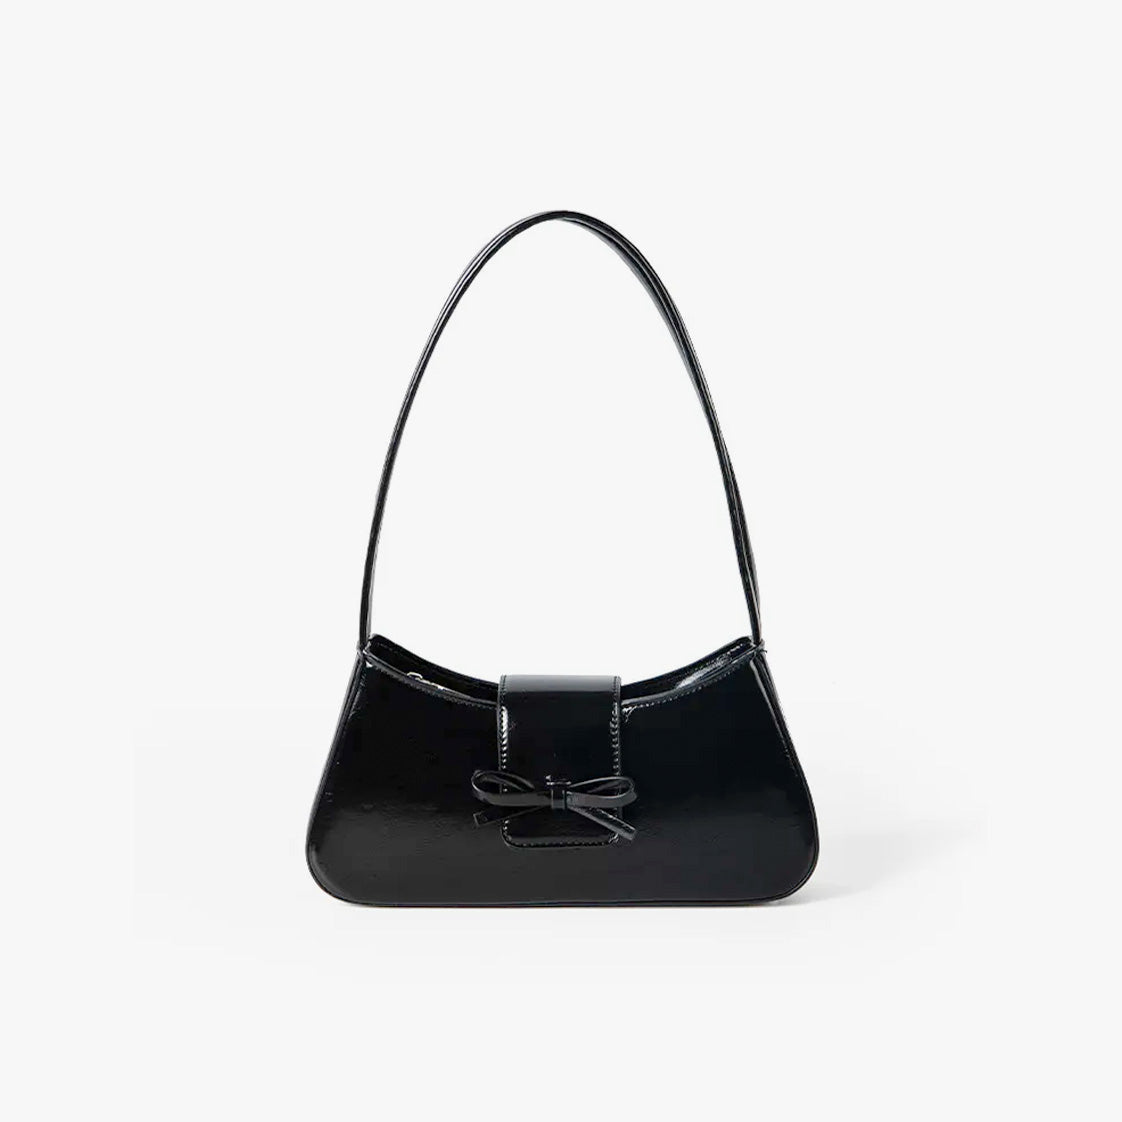 Ruby Aesthetic Bow Leather Handbag